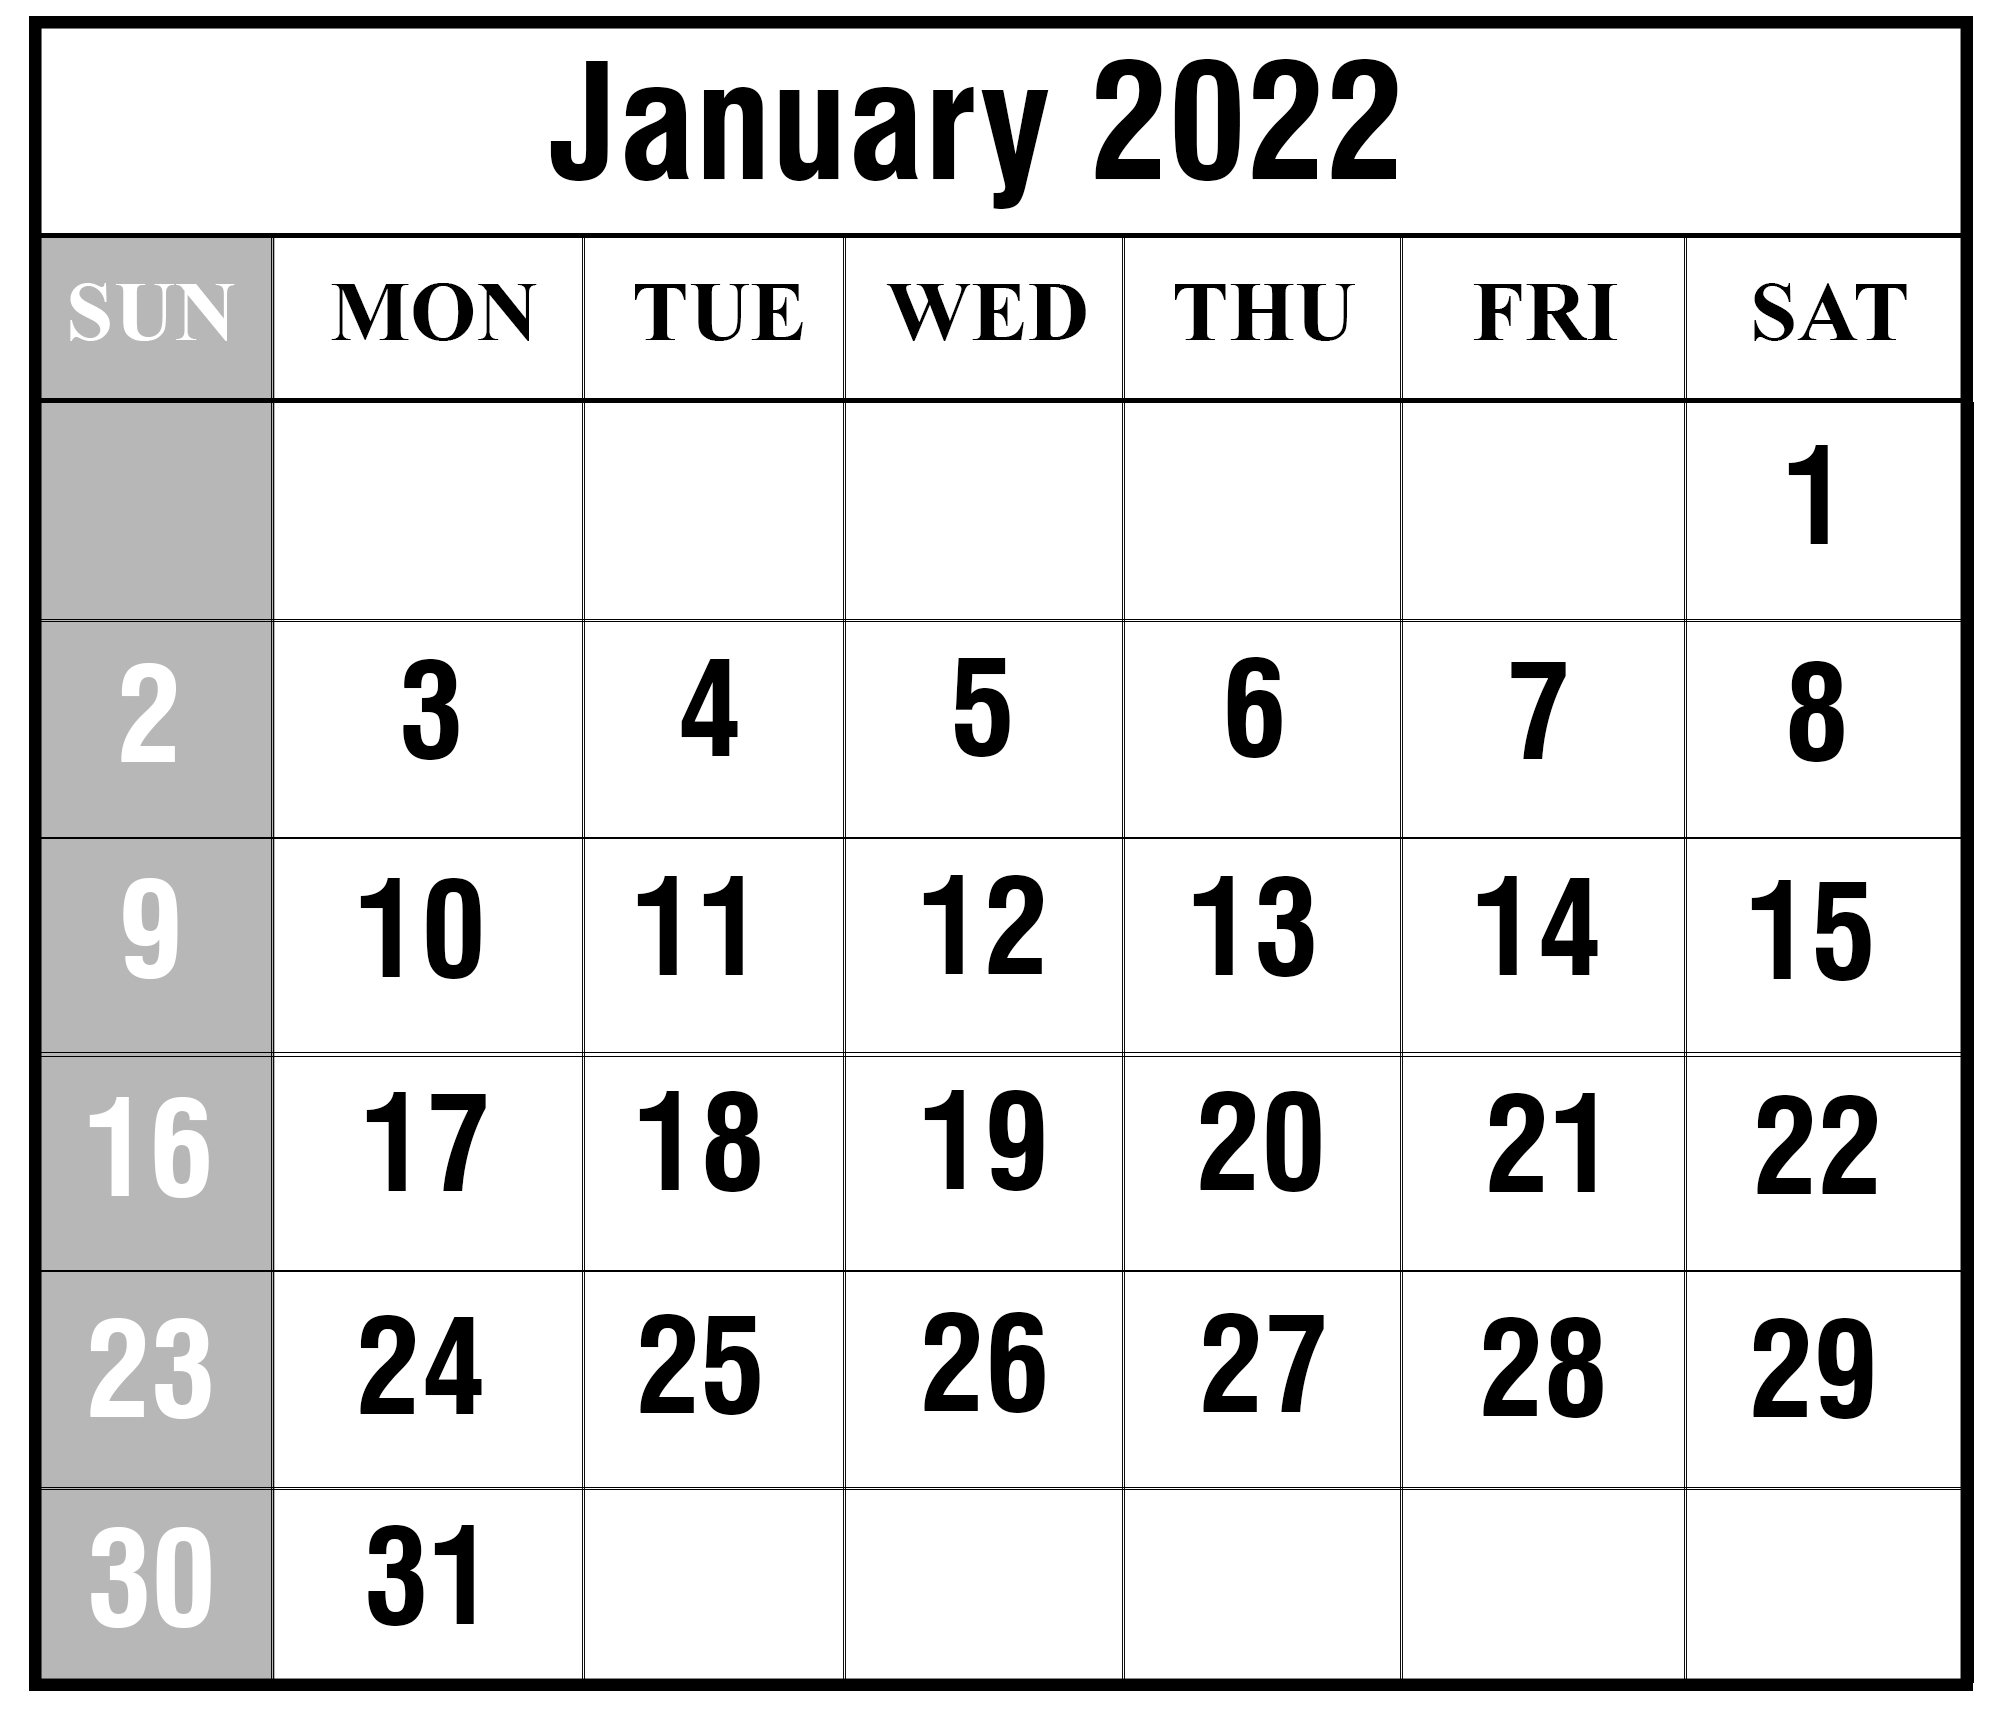 Catch January 2022 Calendar Download